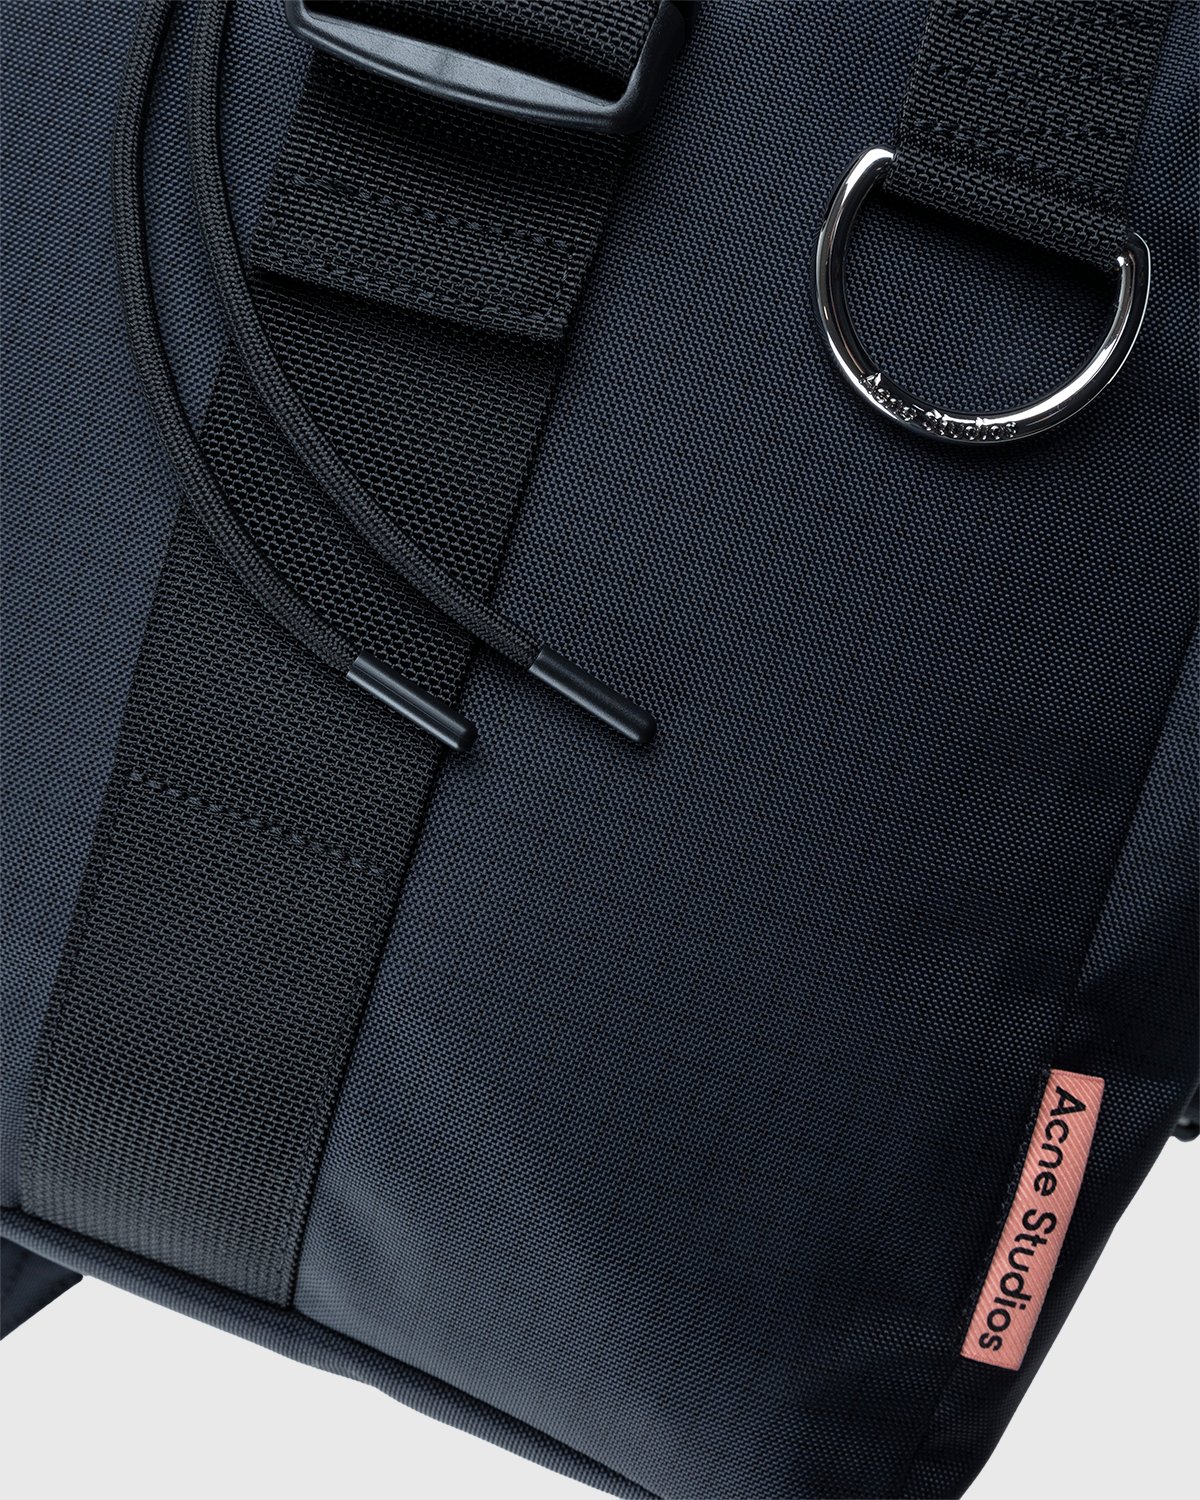 Acne Studios - Large Ripstop Backpack Black - Accessories - Black - Image 3